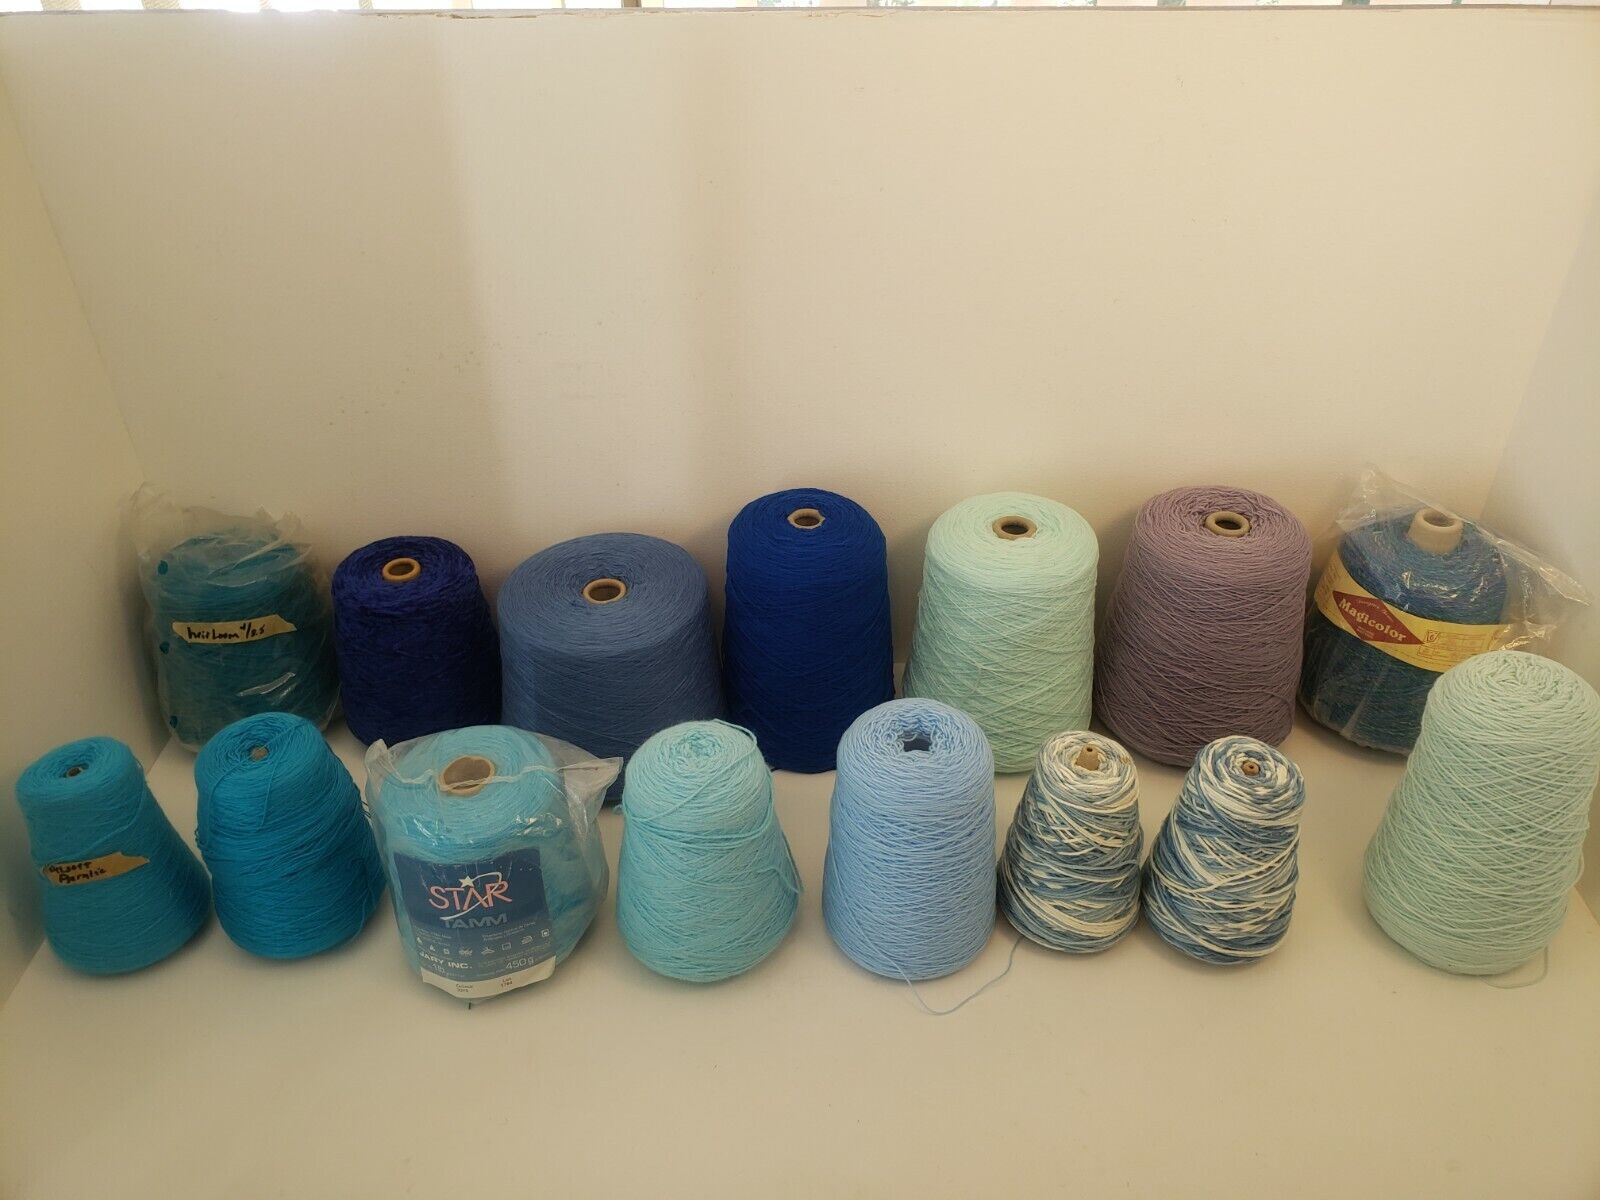 Mixed Lot Superlatite of Yarns Knitting Machines Super beauty product restock quality top! Various Mostl Fibers Colors